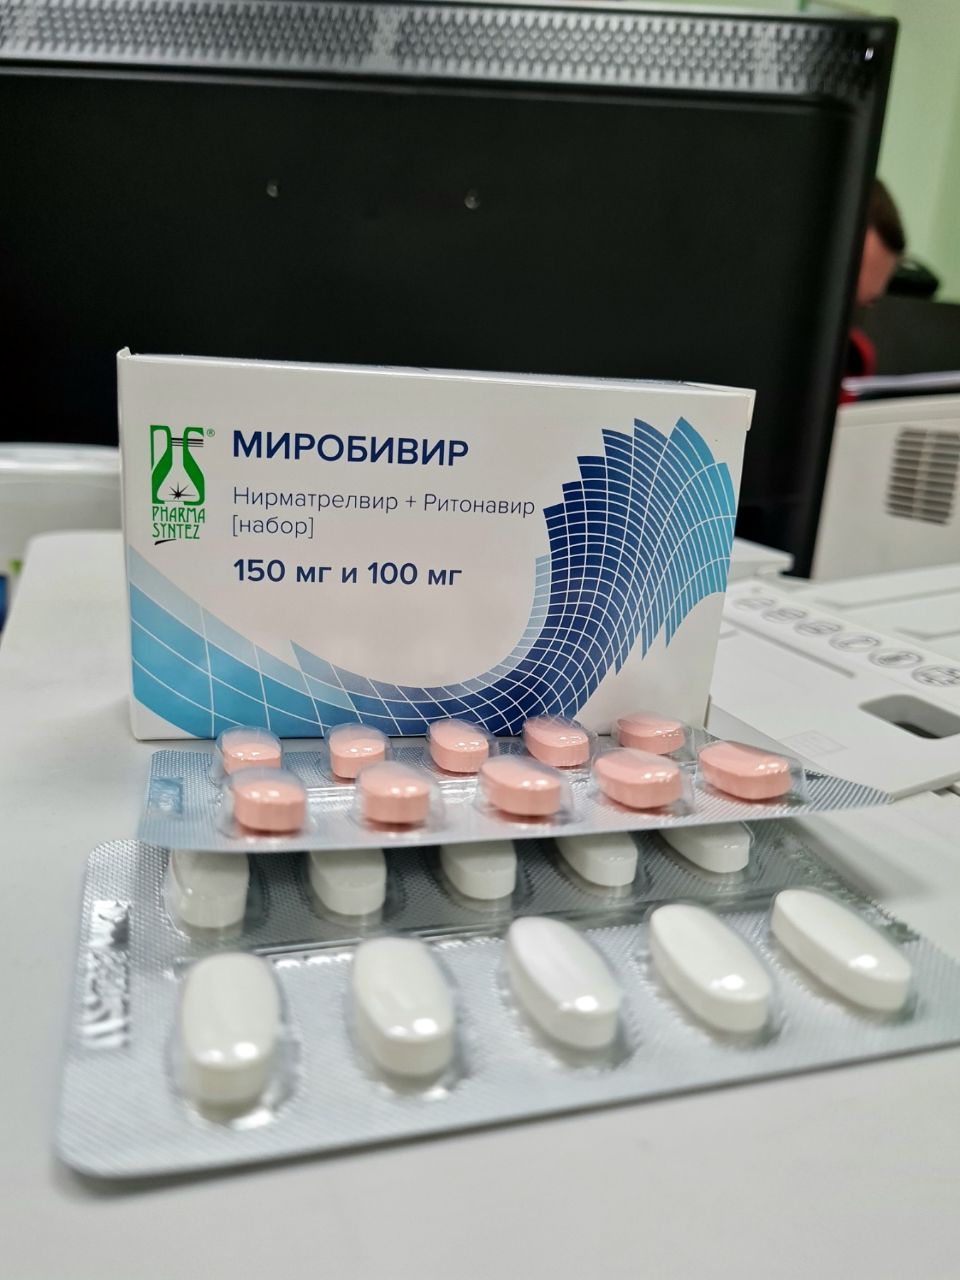 В аптеках "Белфармации" появился препарат против COVID-19 "Миробивир"